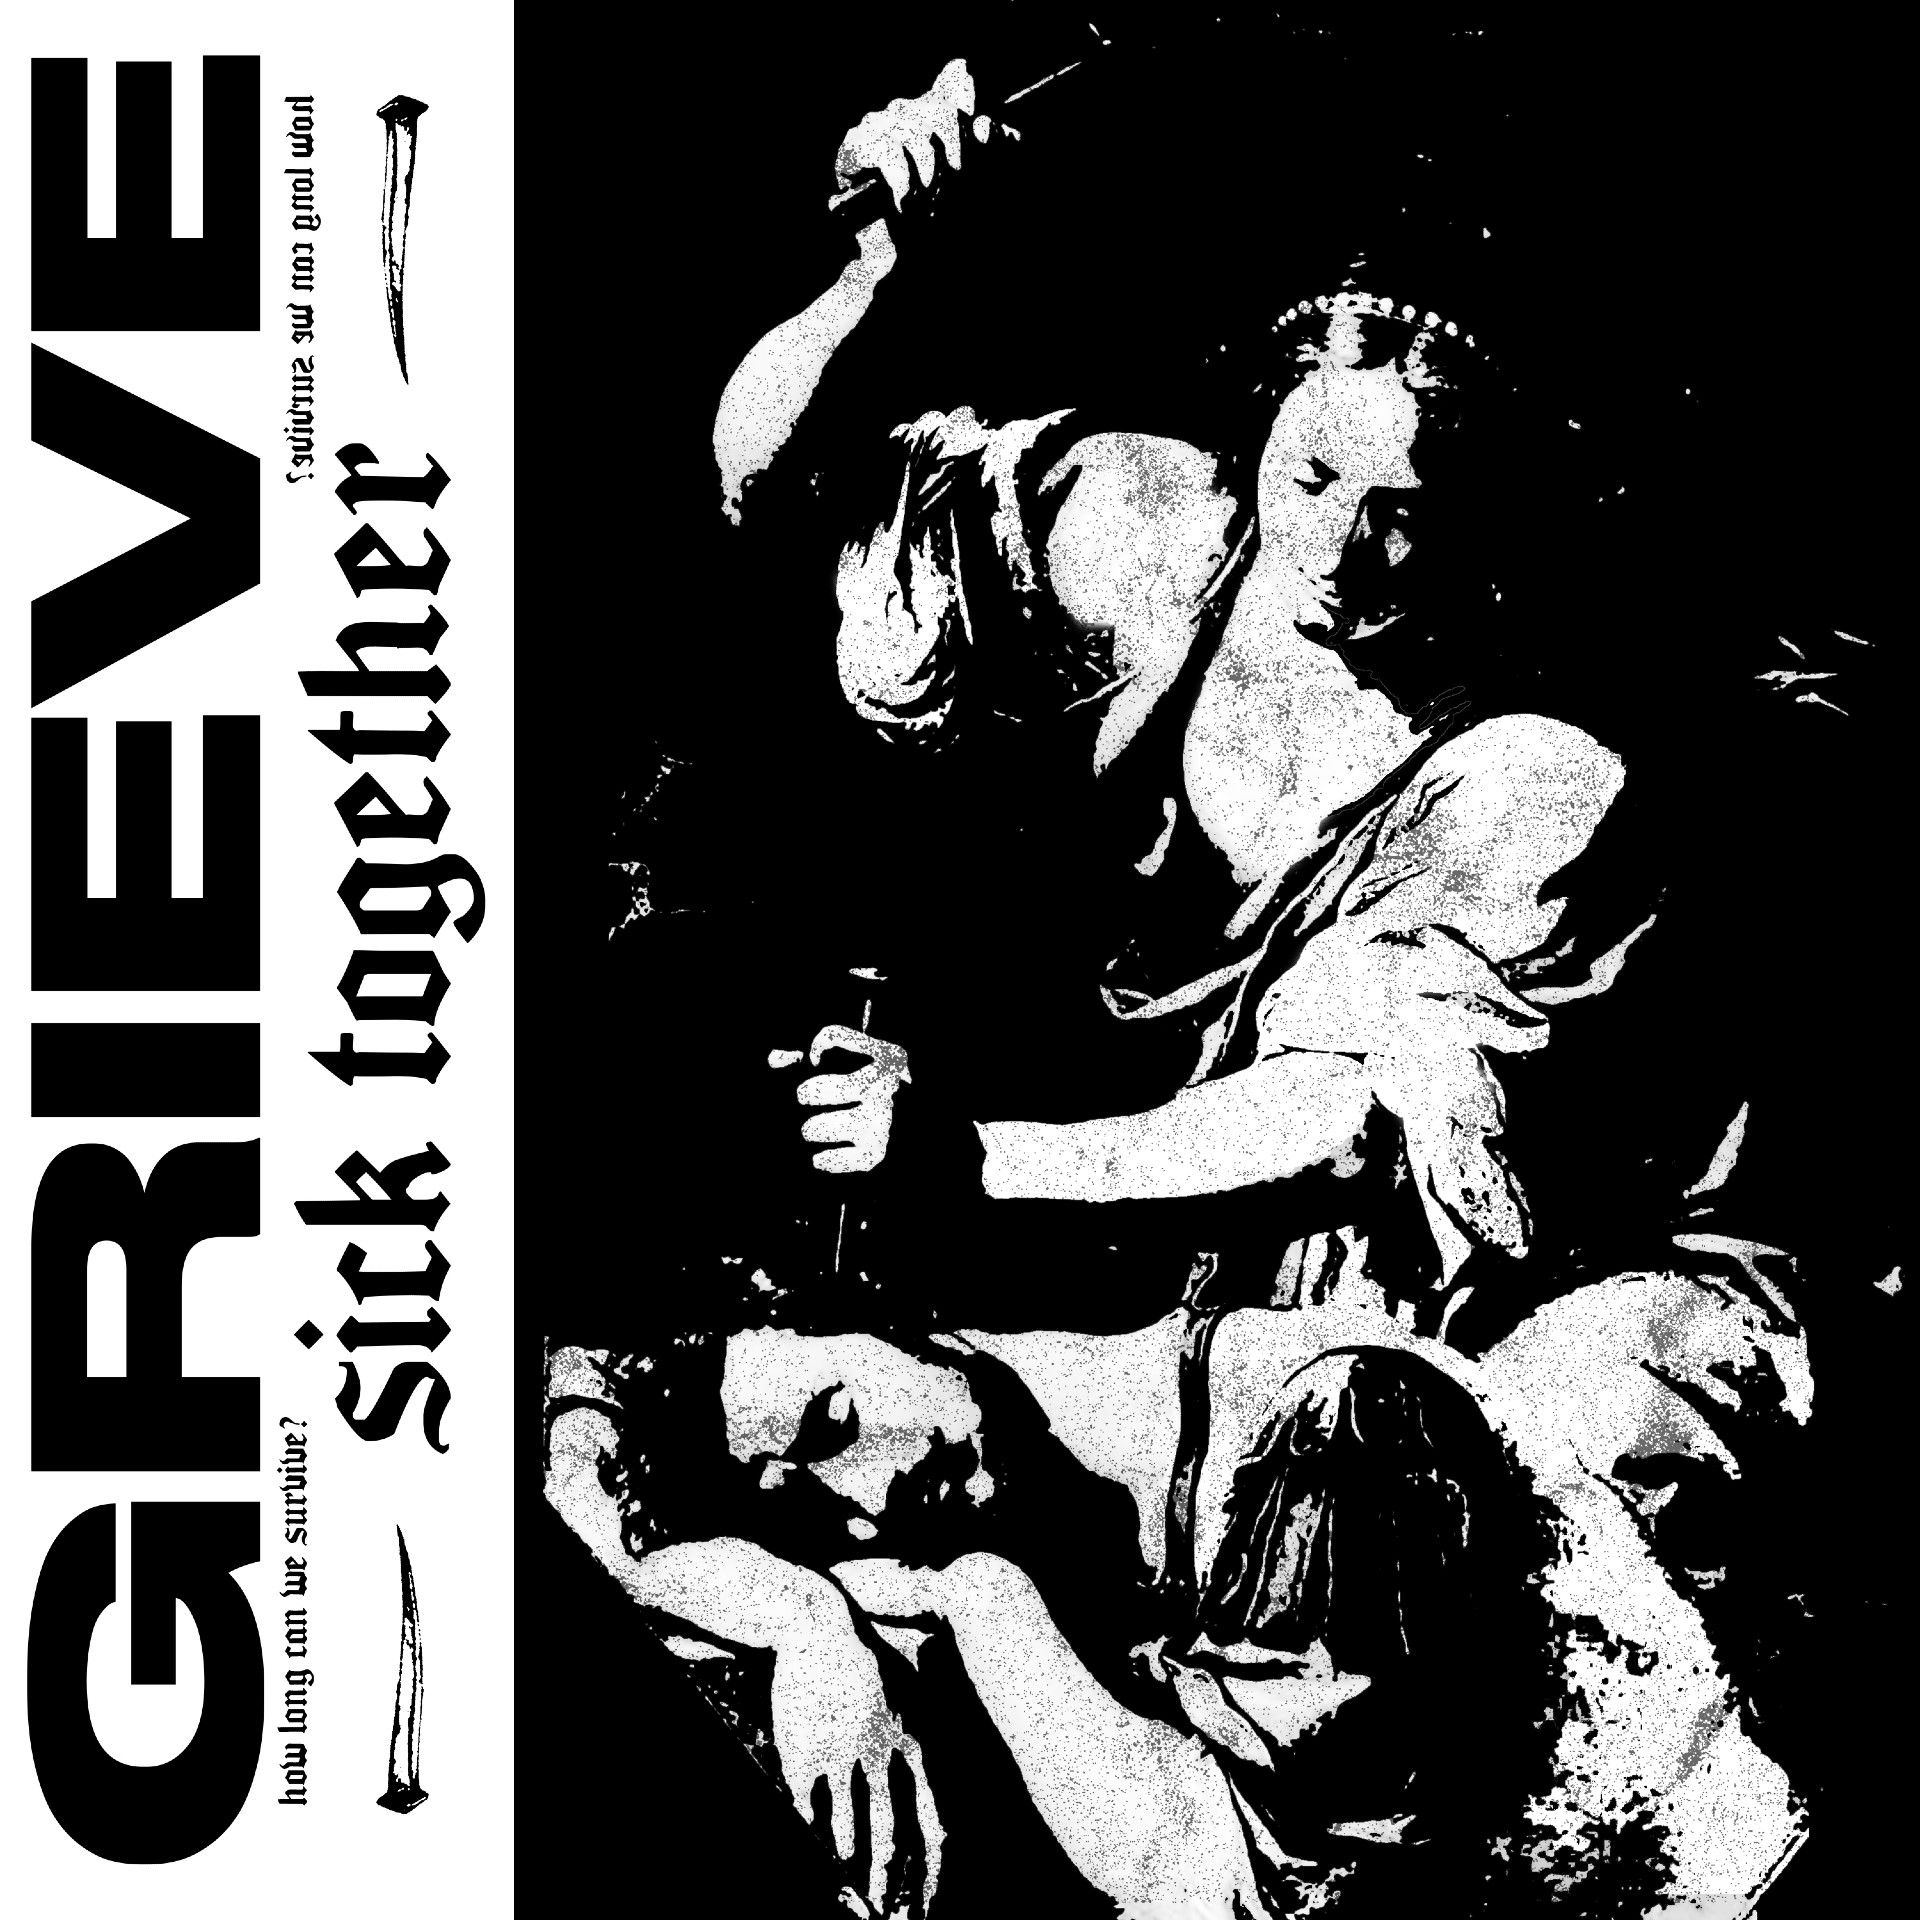 Grieve “Sick Together” single artwork